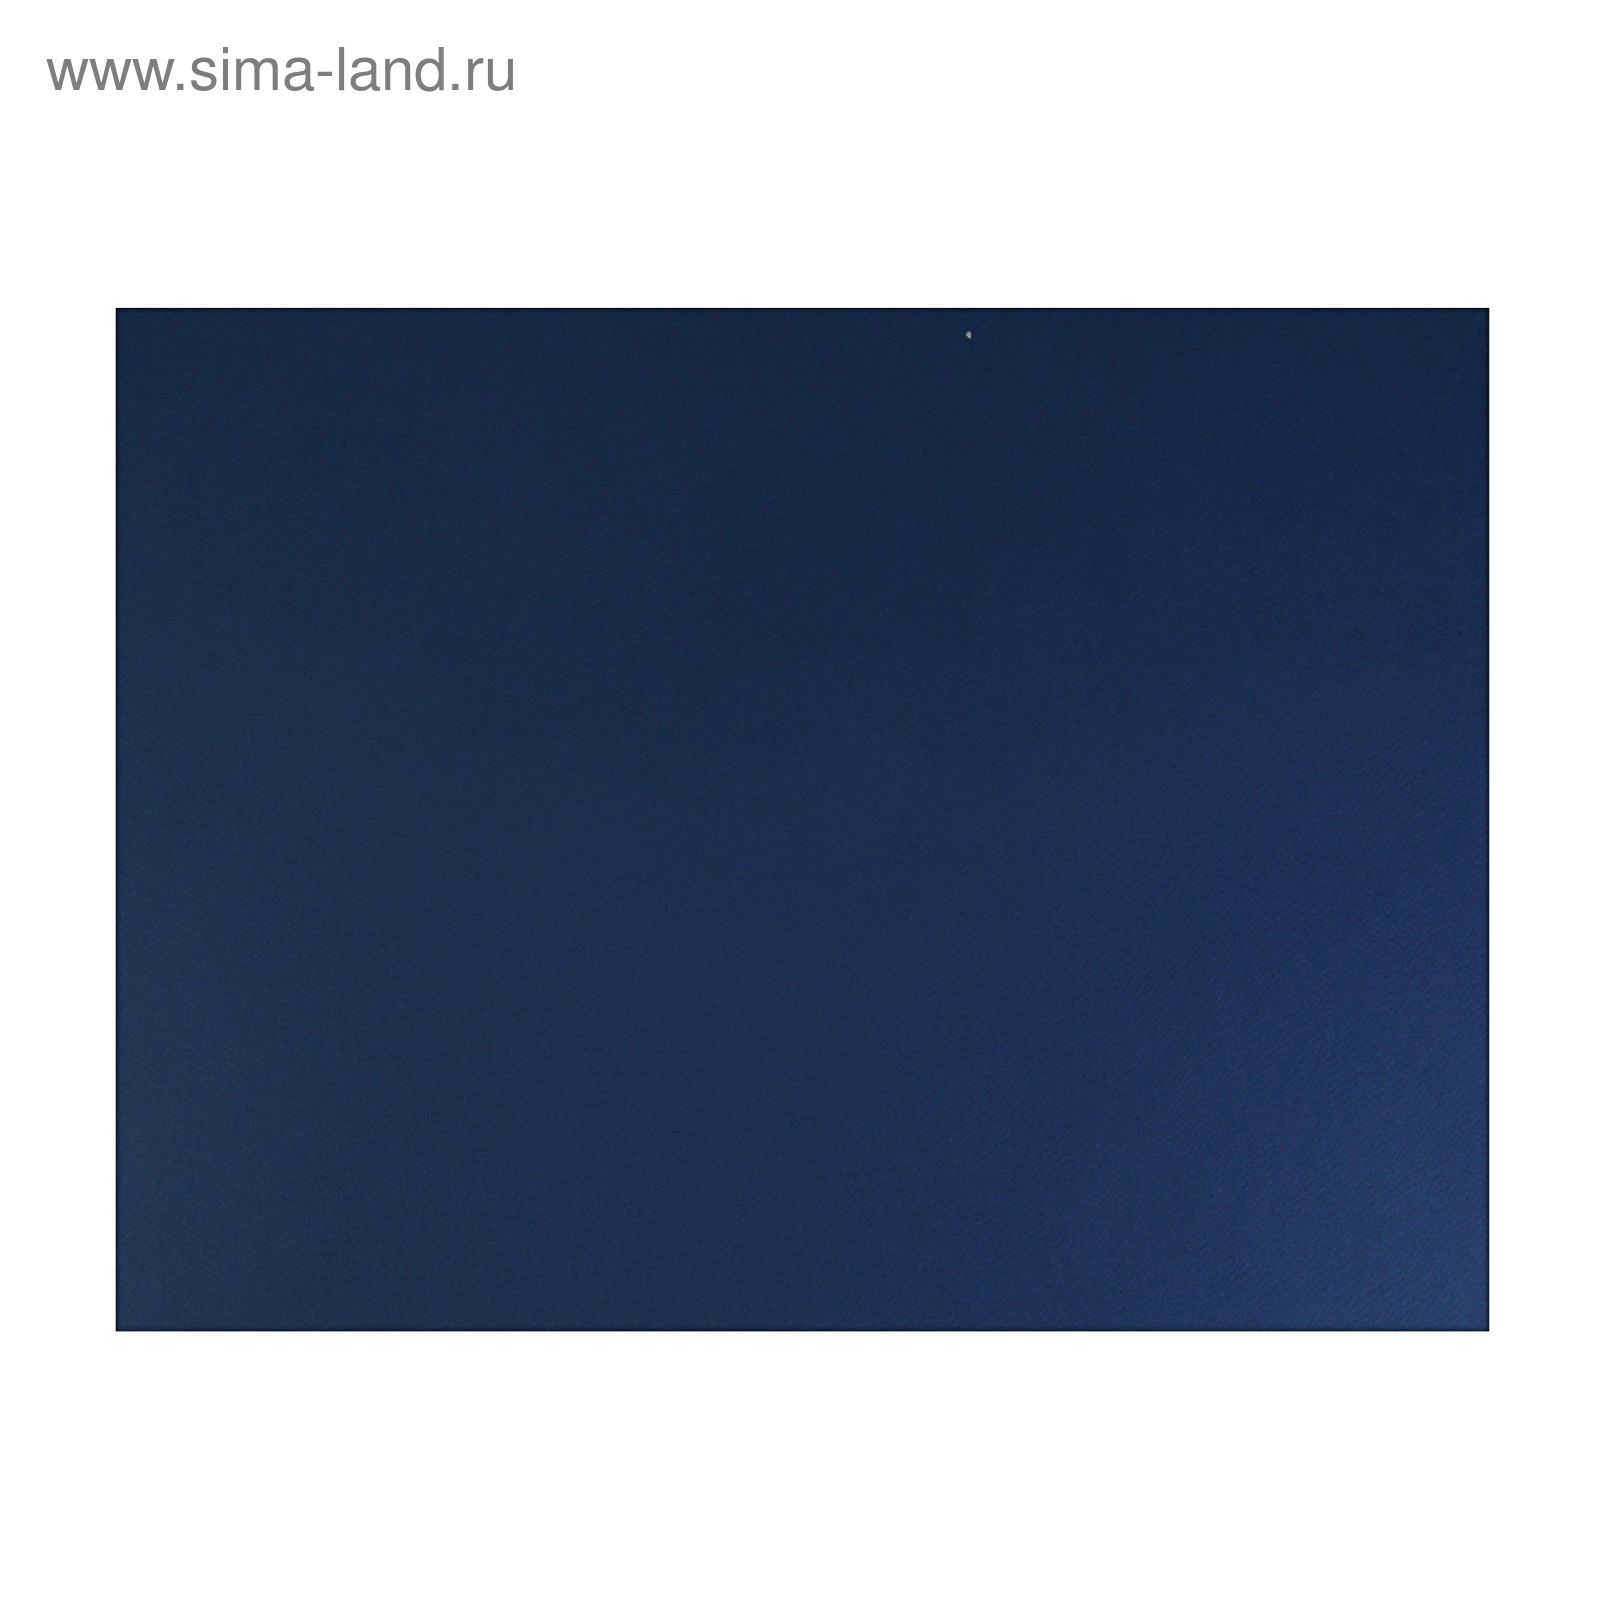 Бумага для пастели Tiziano, 500x650 мм, 160 г/м2, темно-синий, 1 лист